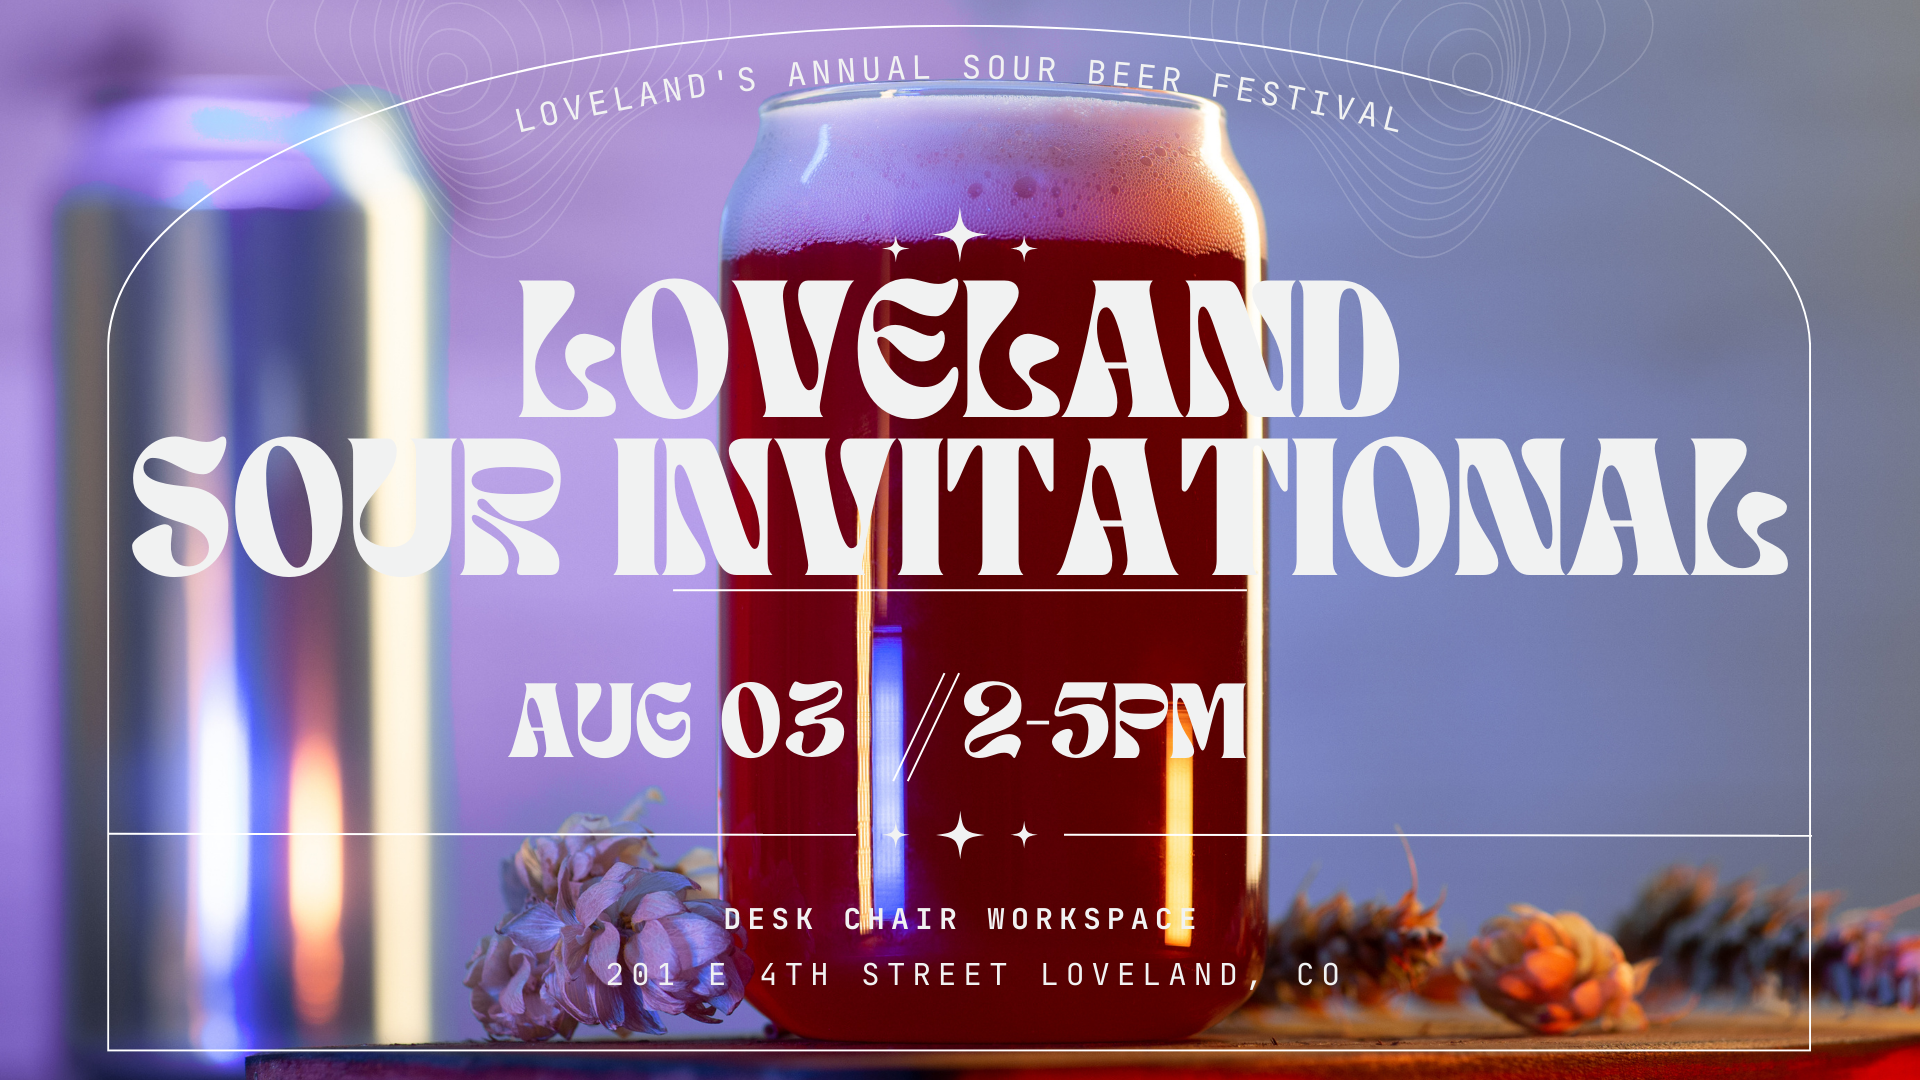 Loveland’s Annual Sour Invitational